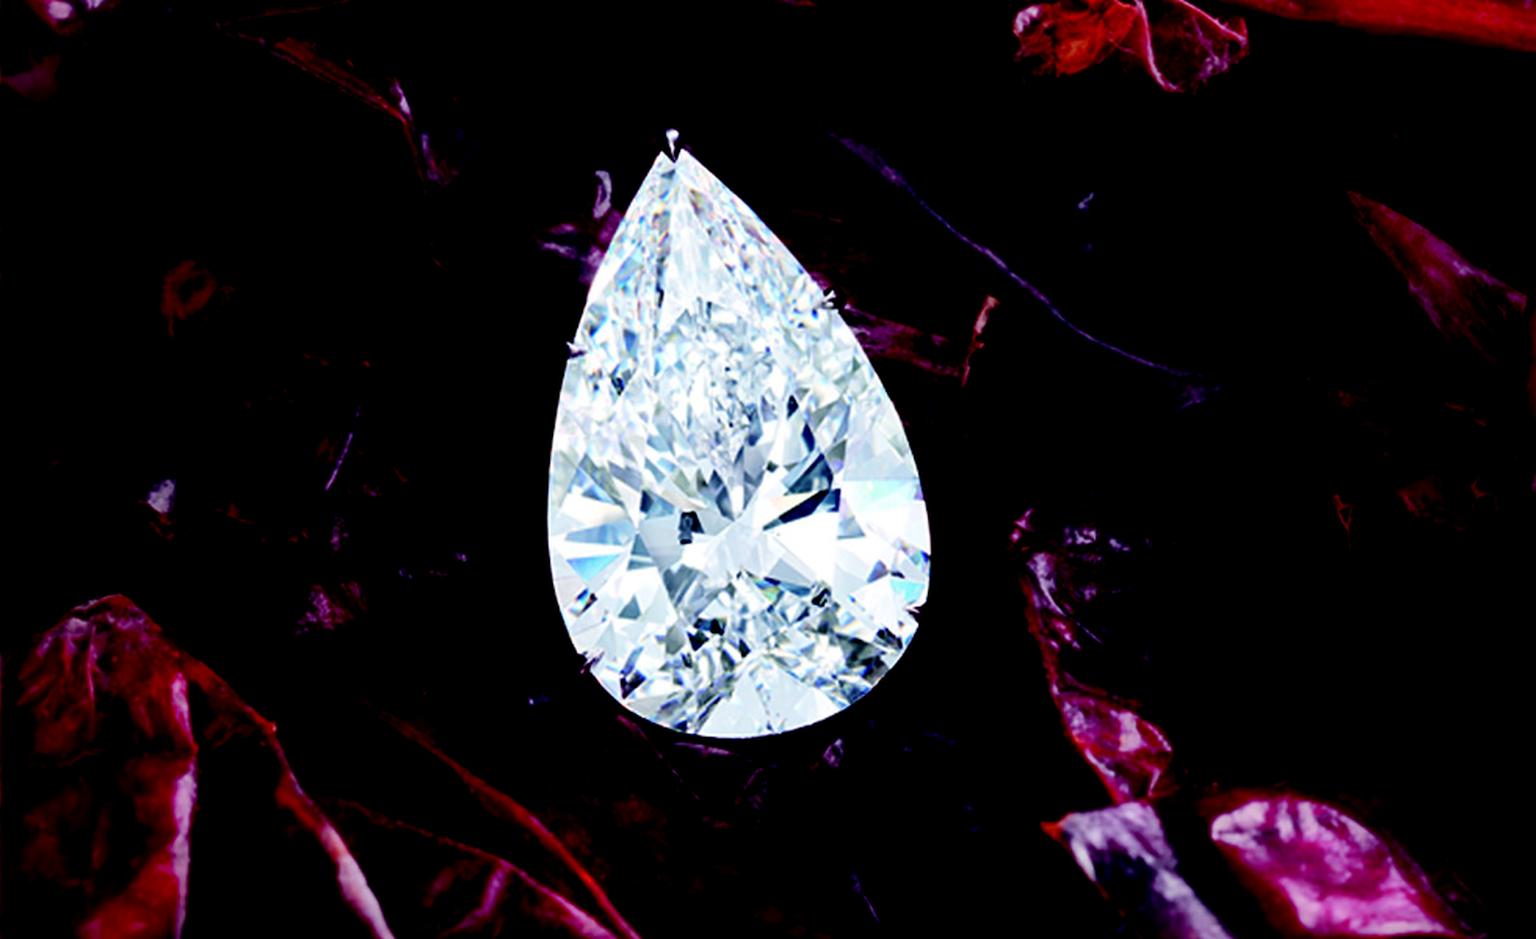 LOT 2853. Diamond pendant. EST 50,000,000 - 60,000,000 HKD. SOLD 52,180,000 HKD